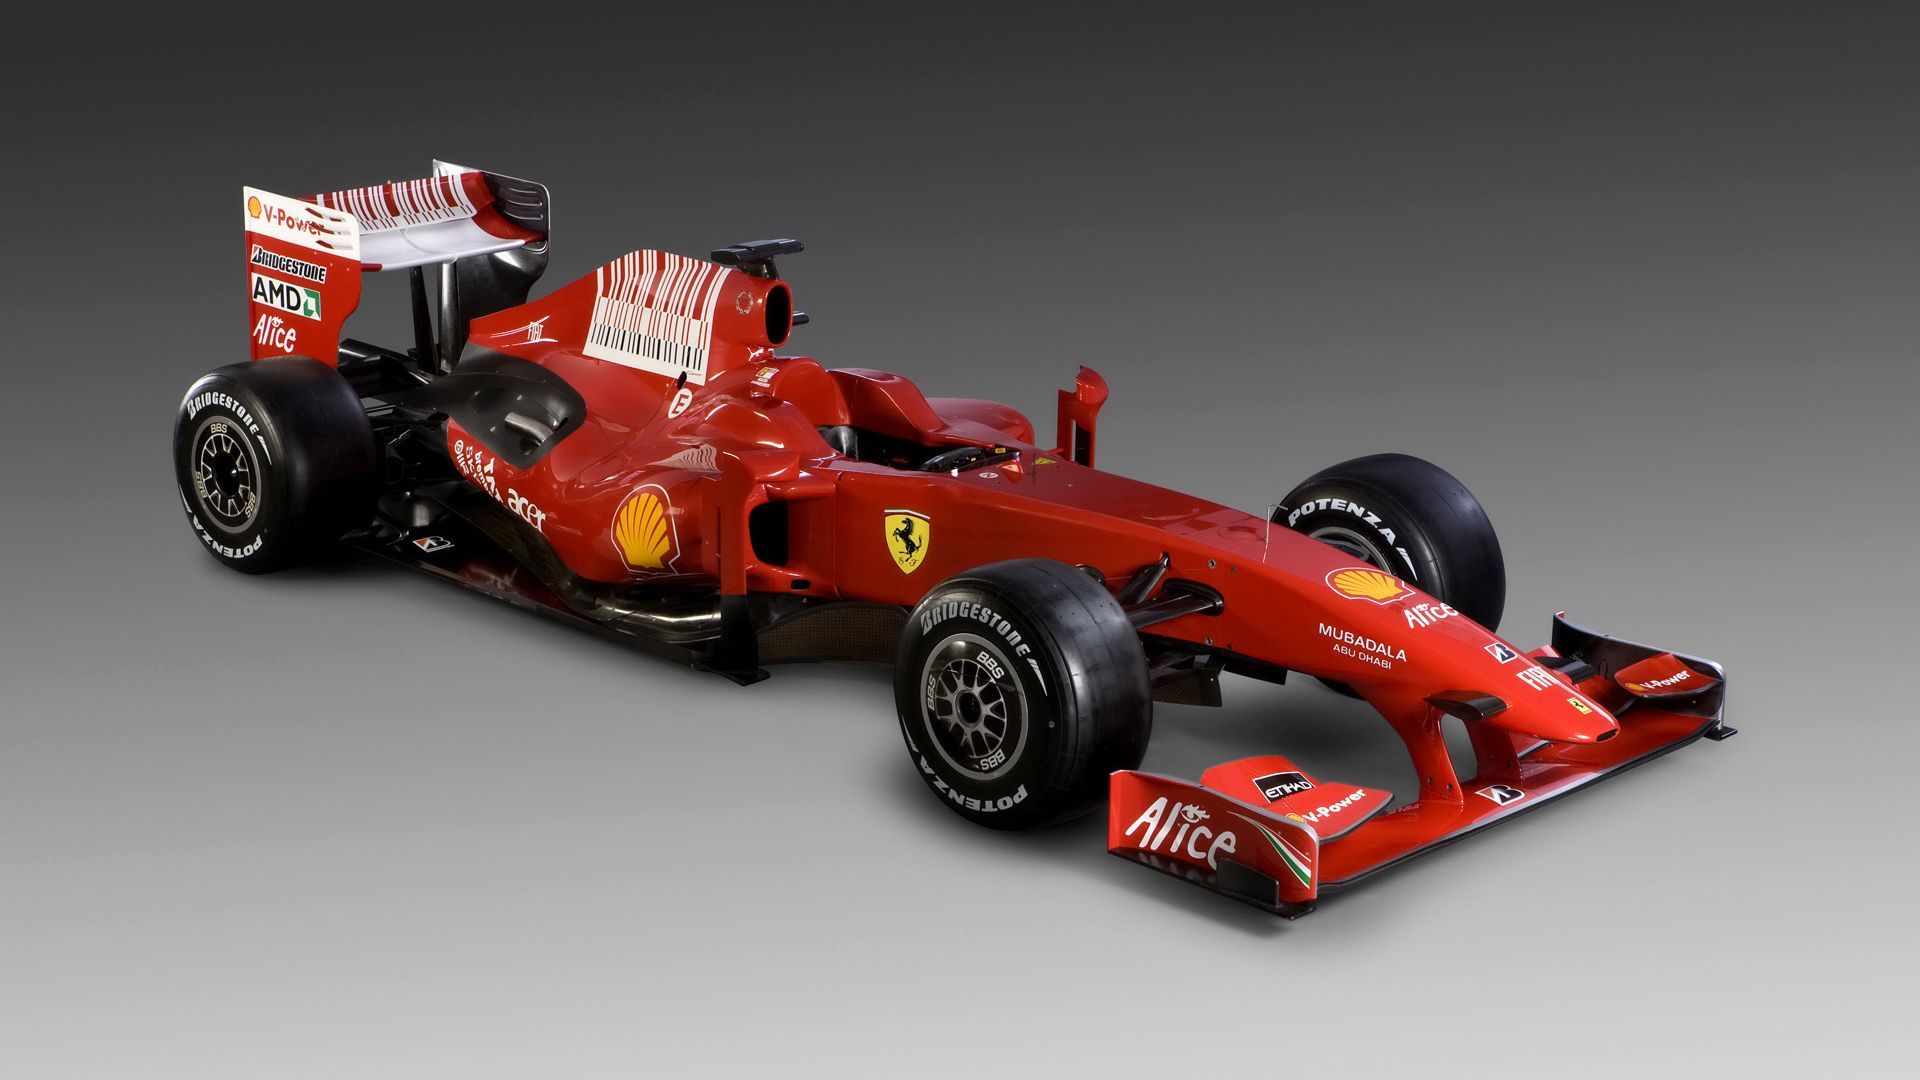 Ferrari F60 HDTV 1080p Wallpapers | HD Wallpapers